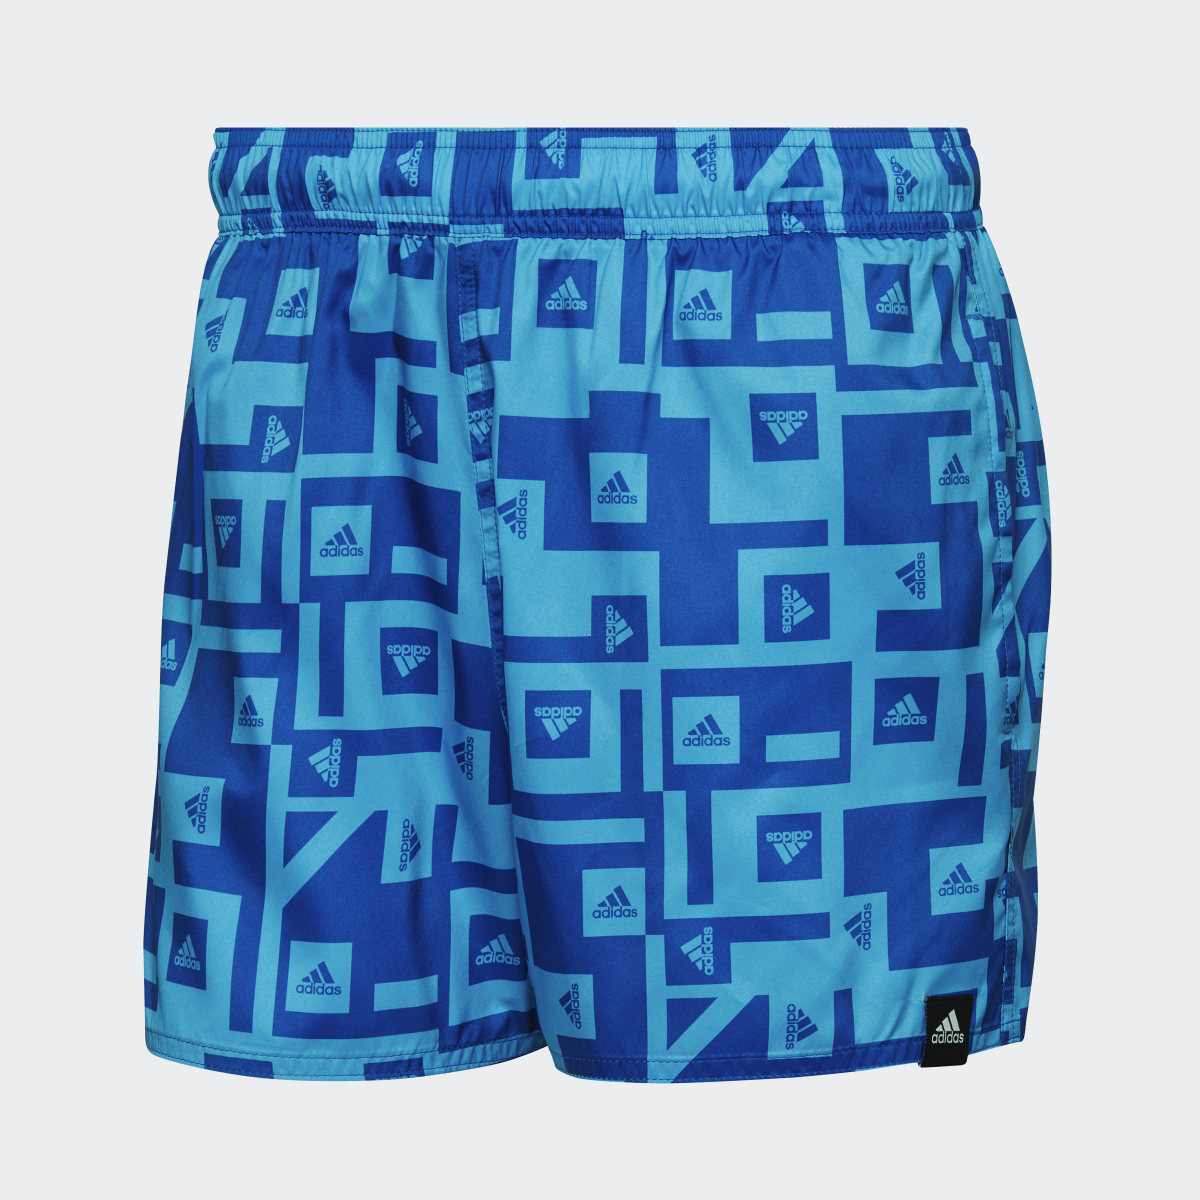 Adidas Graphic Swim Shorts. 4